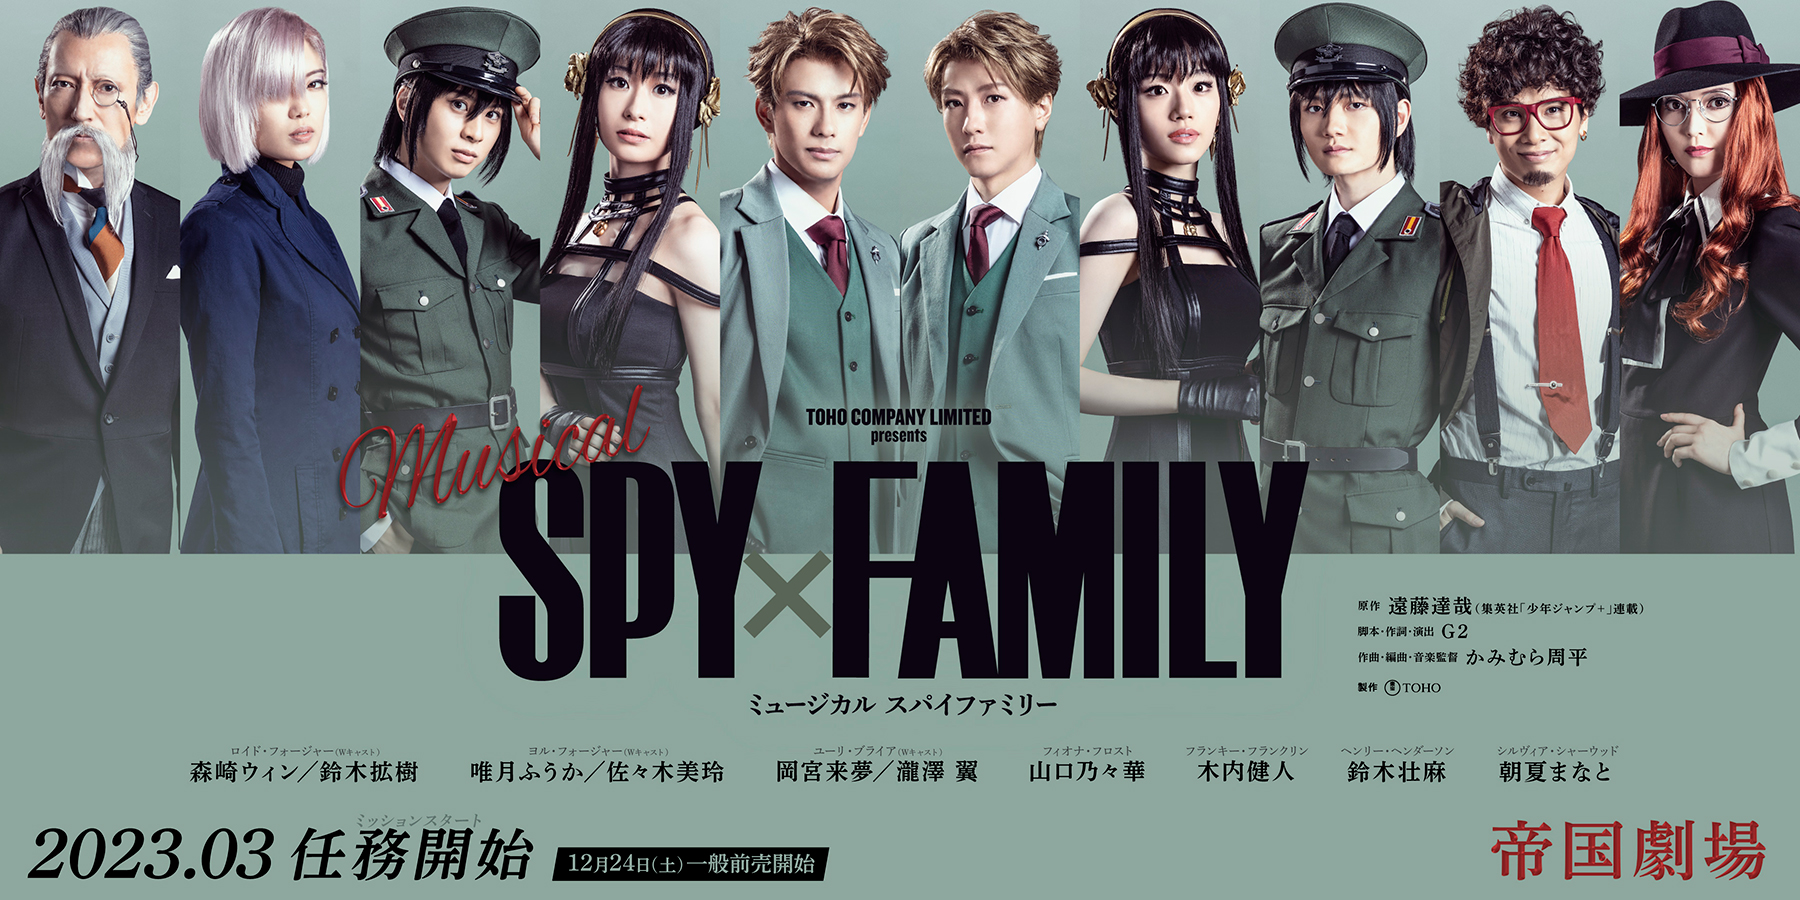  Spy X Family Tome 12